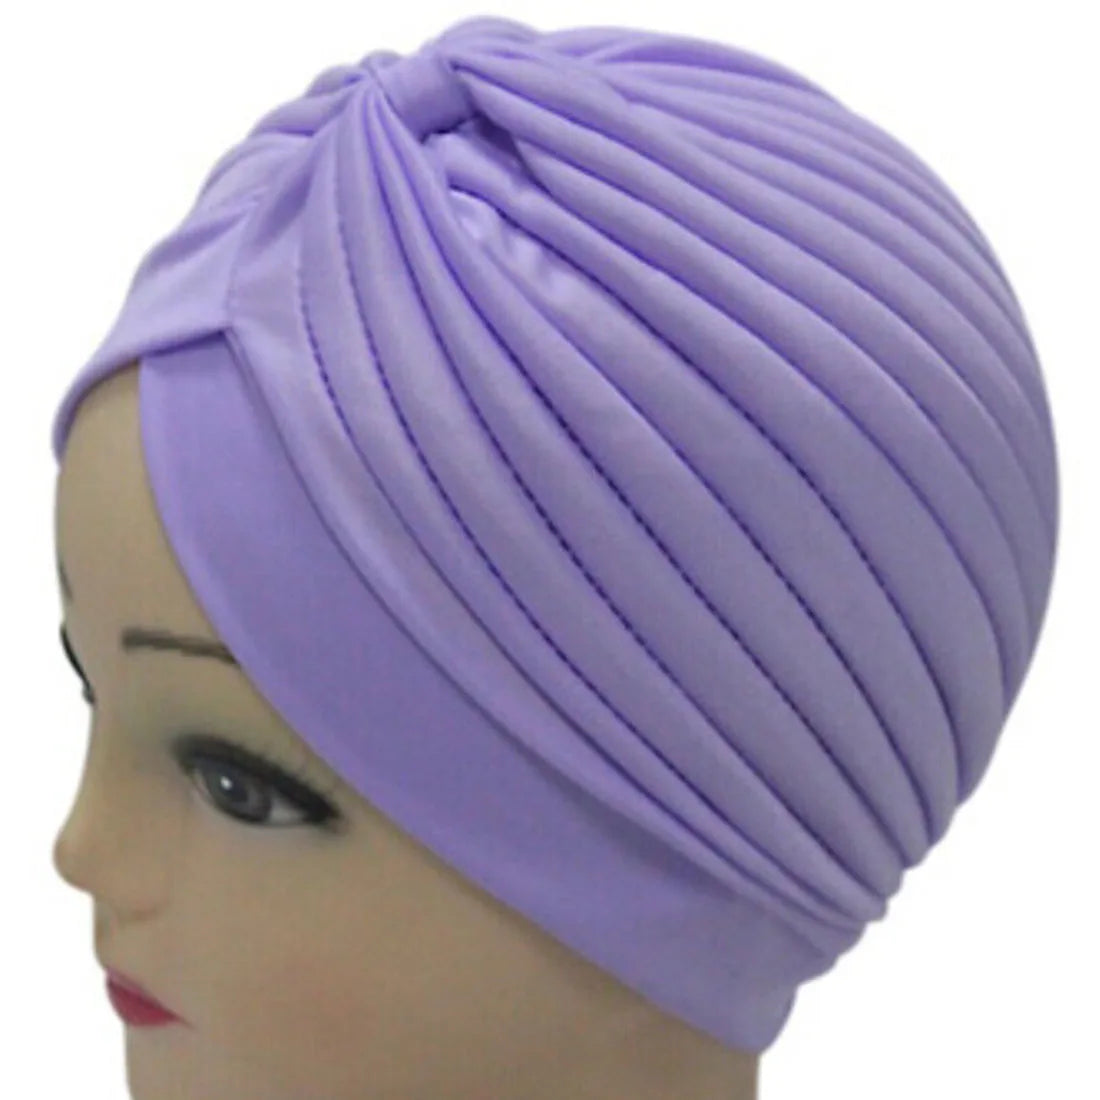 Stretchy Turban Muslim Hat Women's Hat Fashion Solid Bandage Bandanas Headband Wrap Hijab Knotted Indian Cap